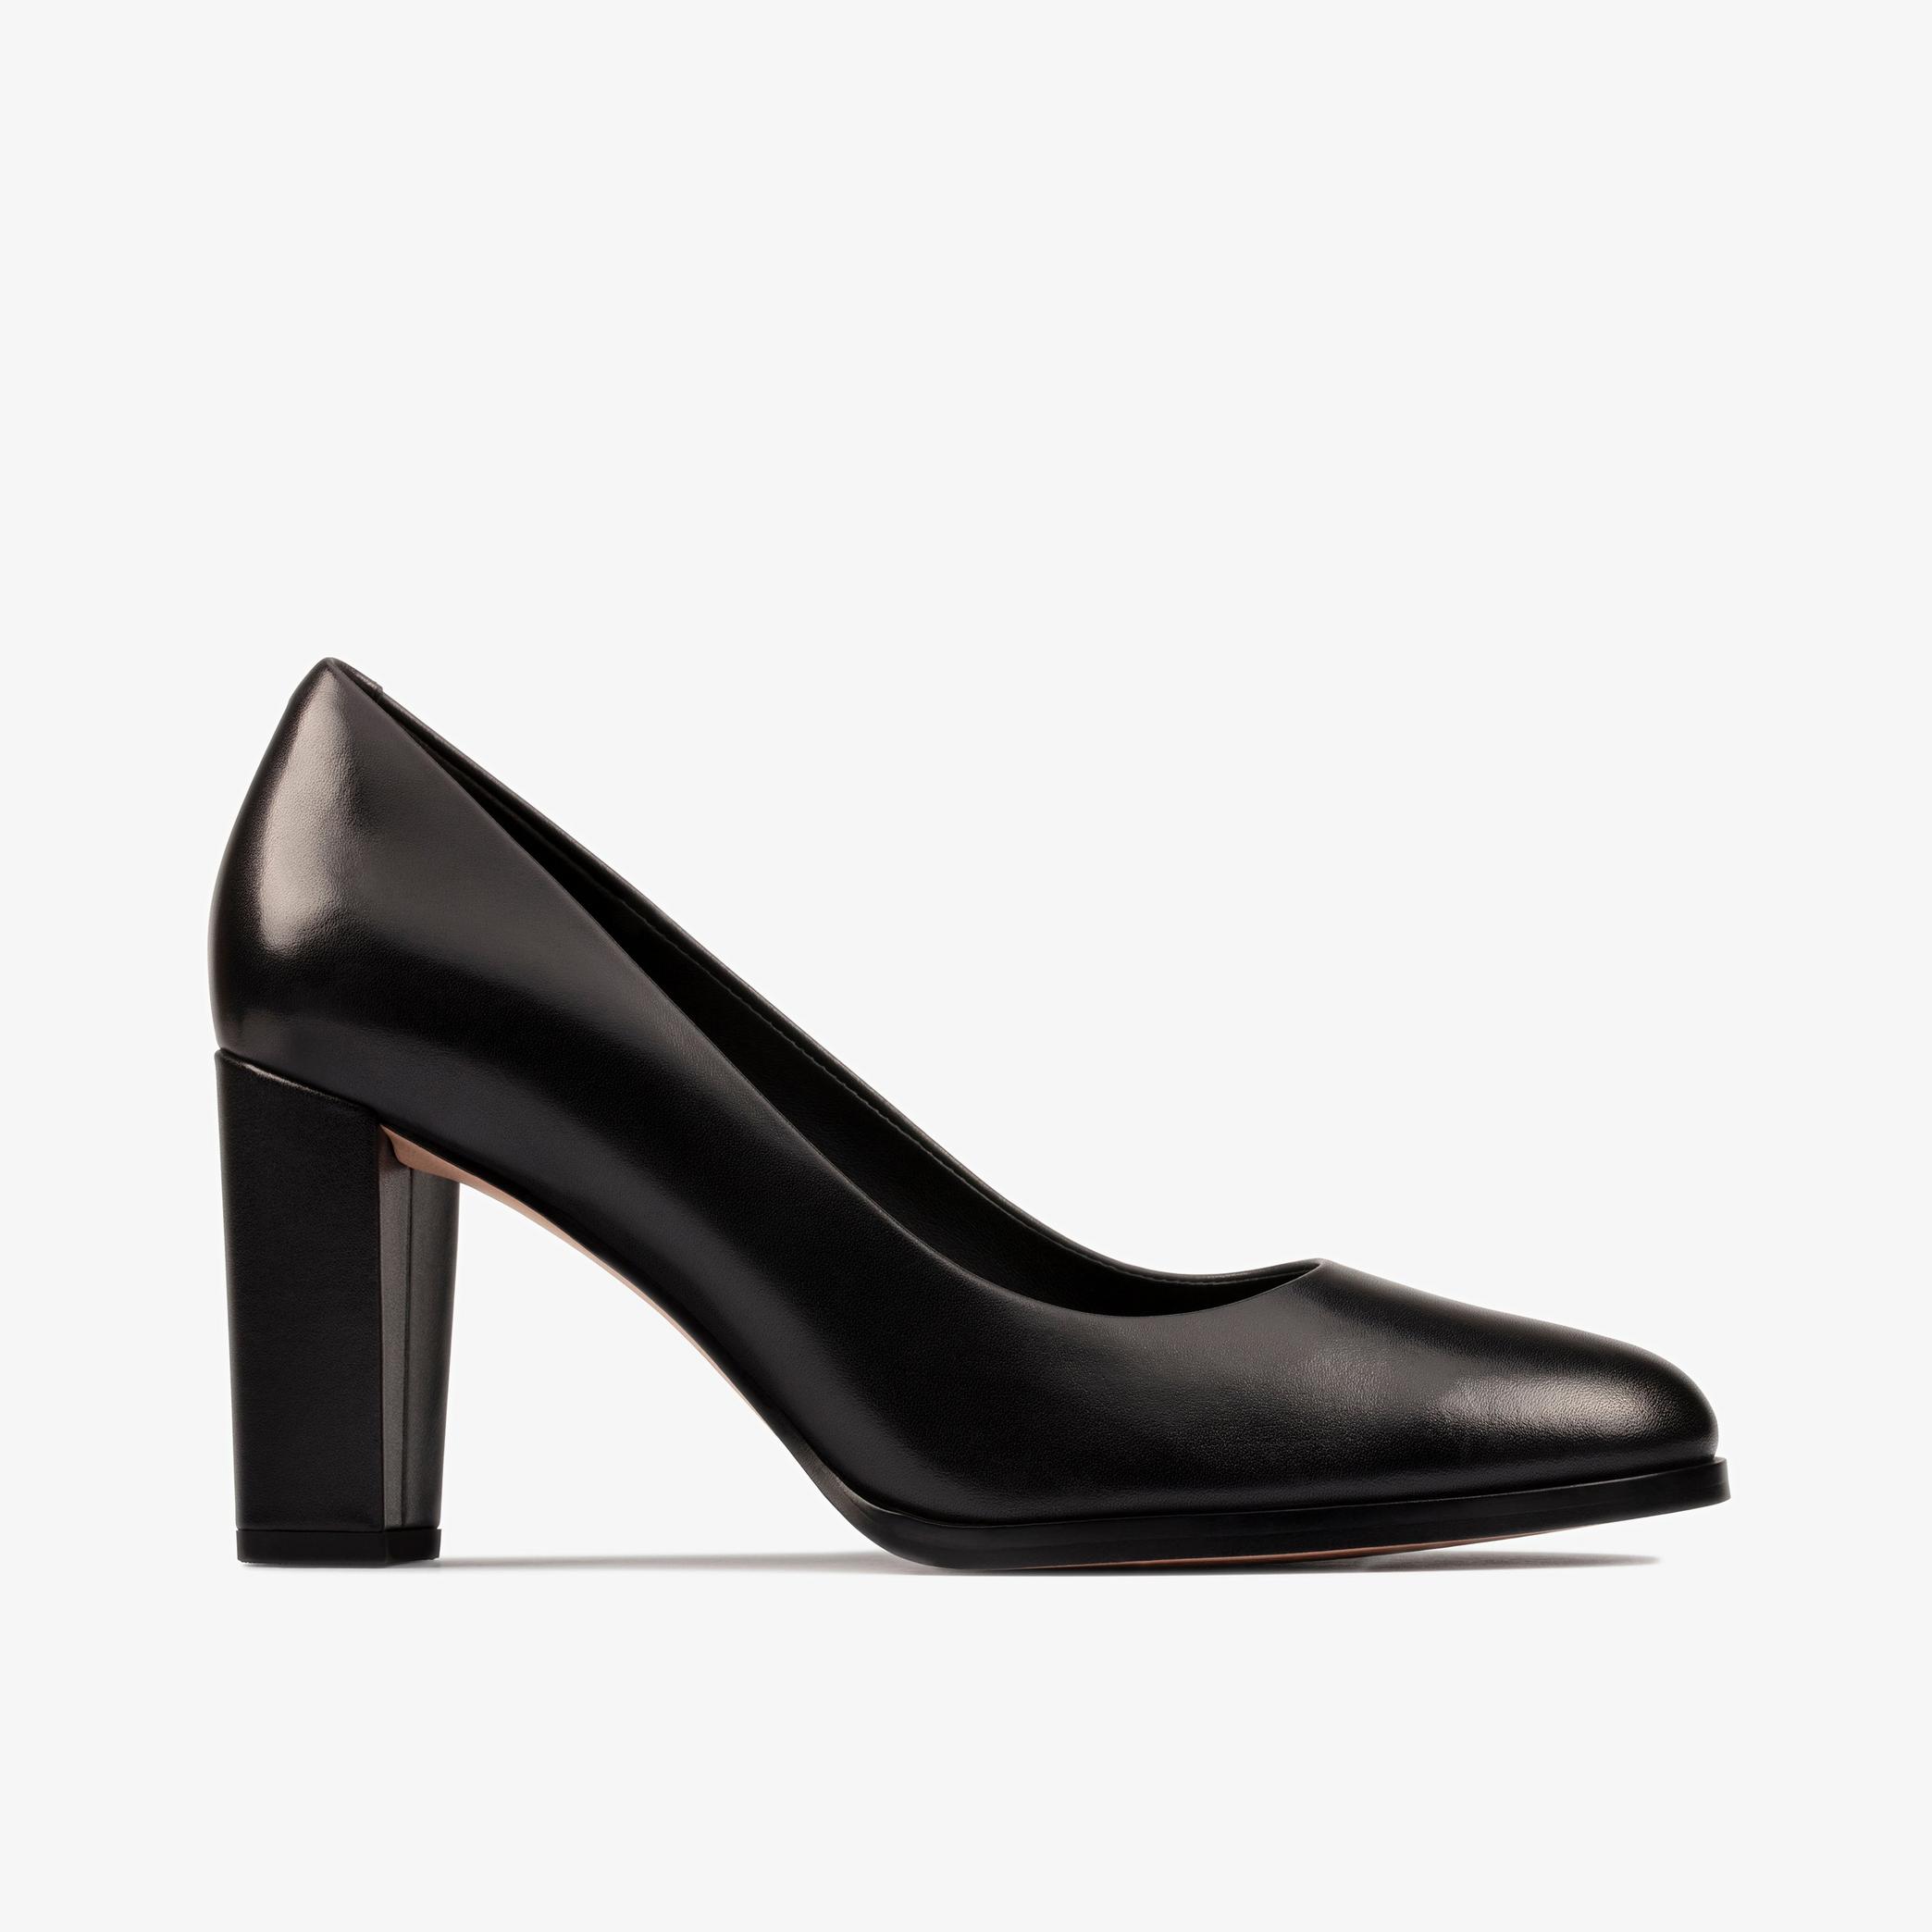 Kaylin Cara 2 Black Leather High Heels, view 1 of 6